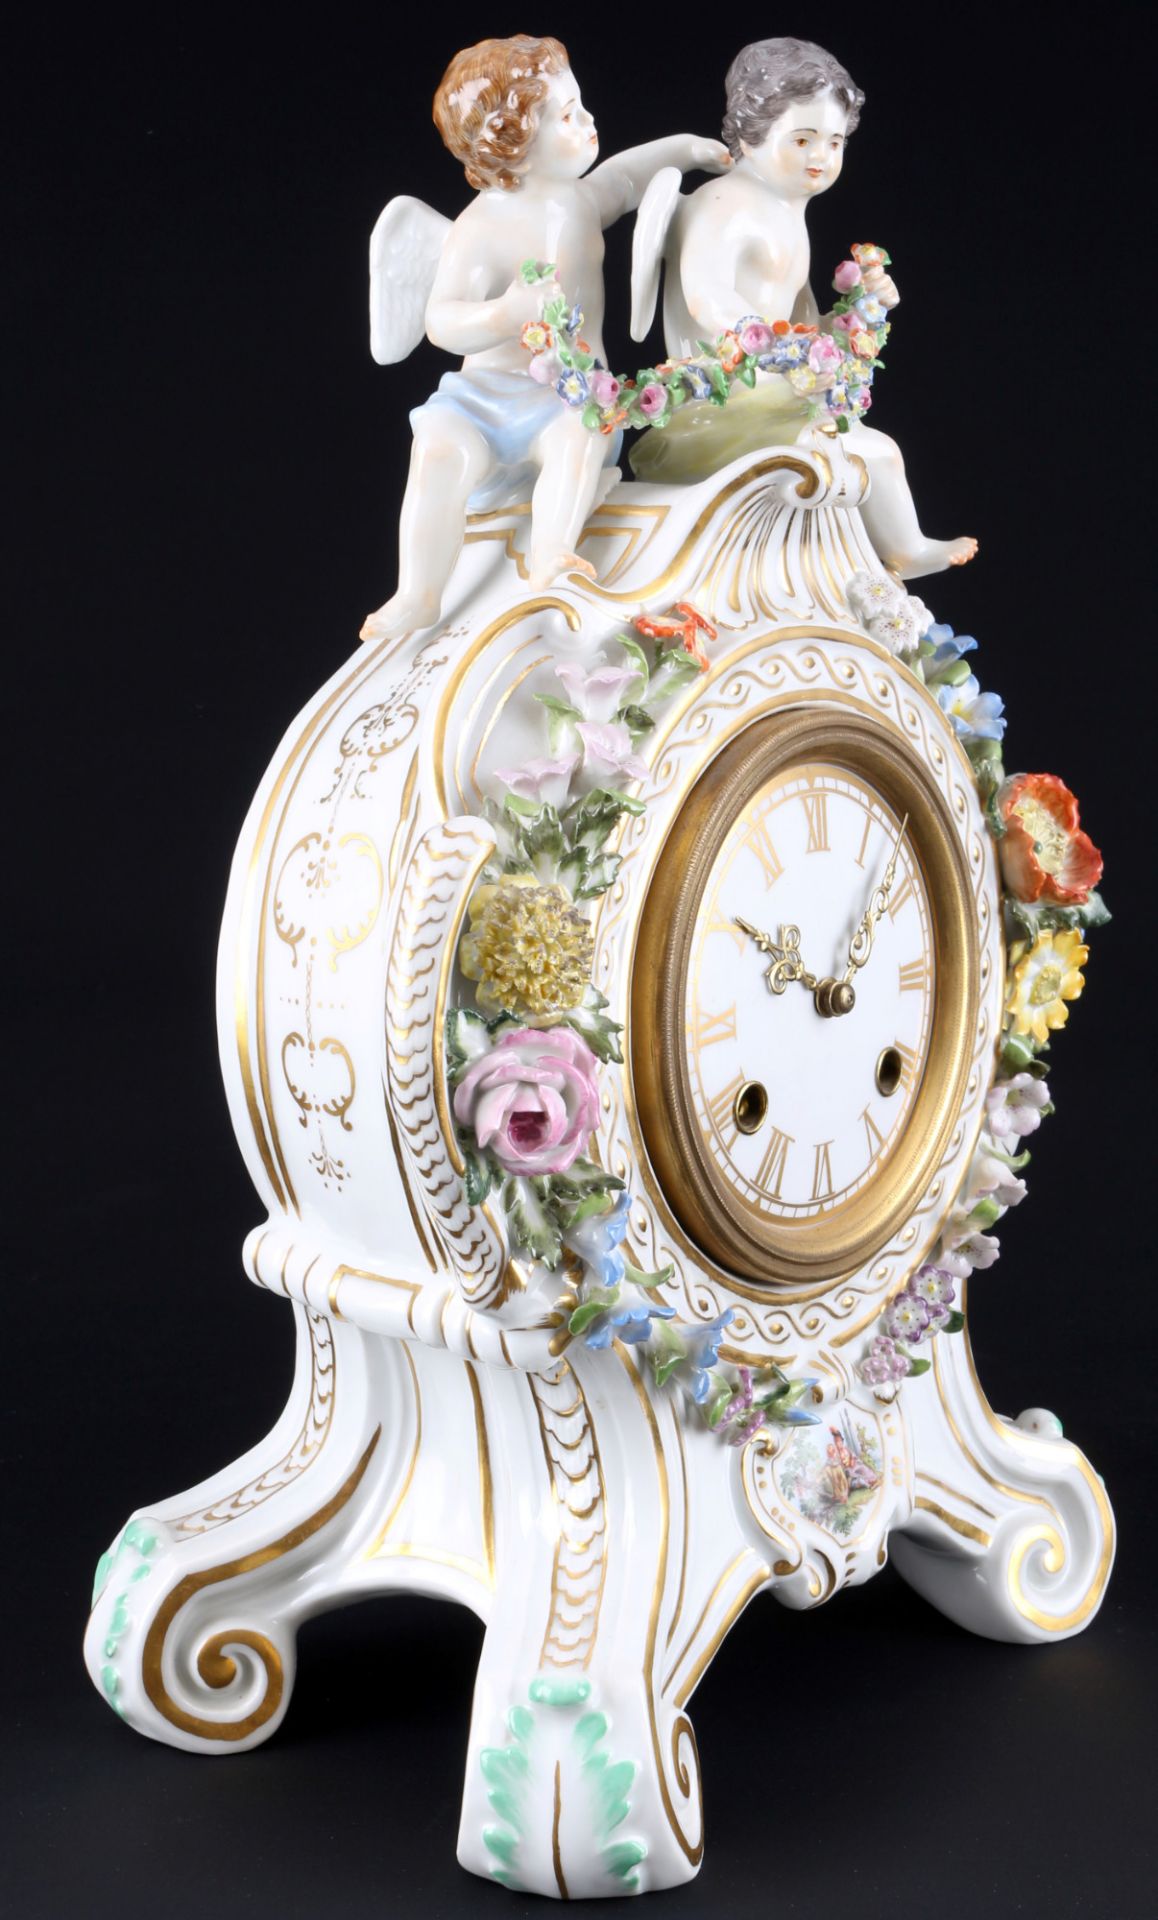 Meissen mantel clock with cherubs and flowers 1st choice - Ernst August LEUTERITZ, - Image 3 of 6